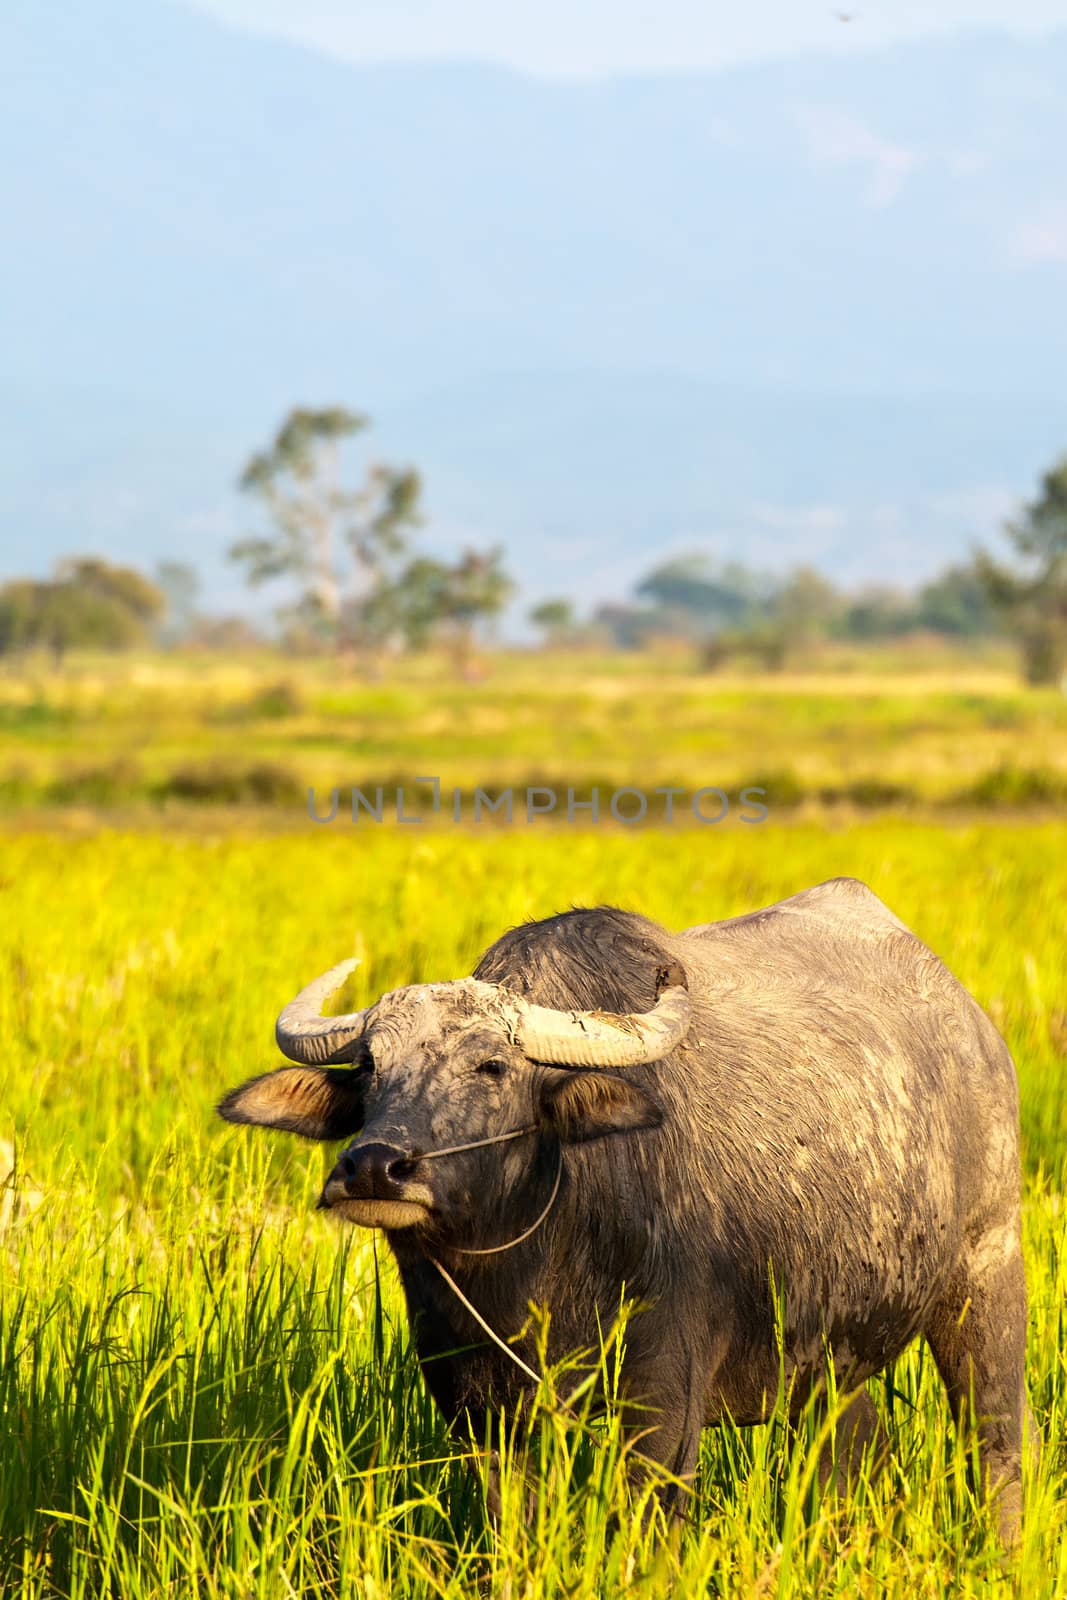 Thai buffalo in grass field by Yuri2012